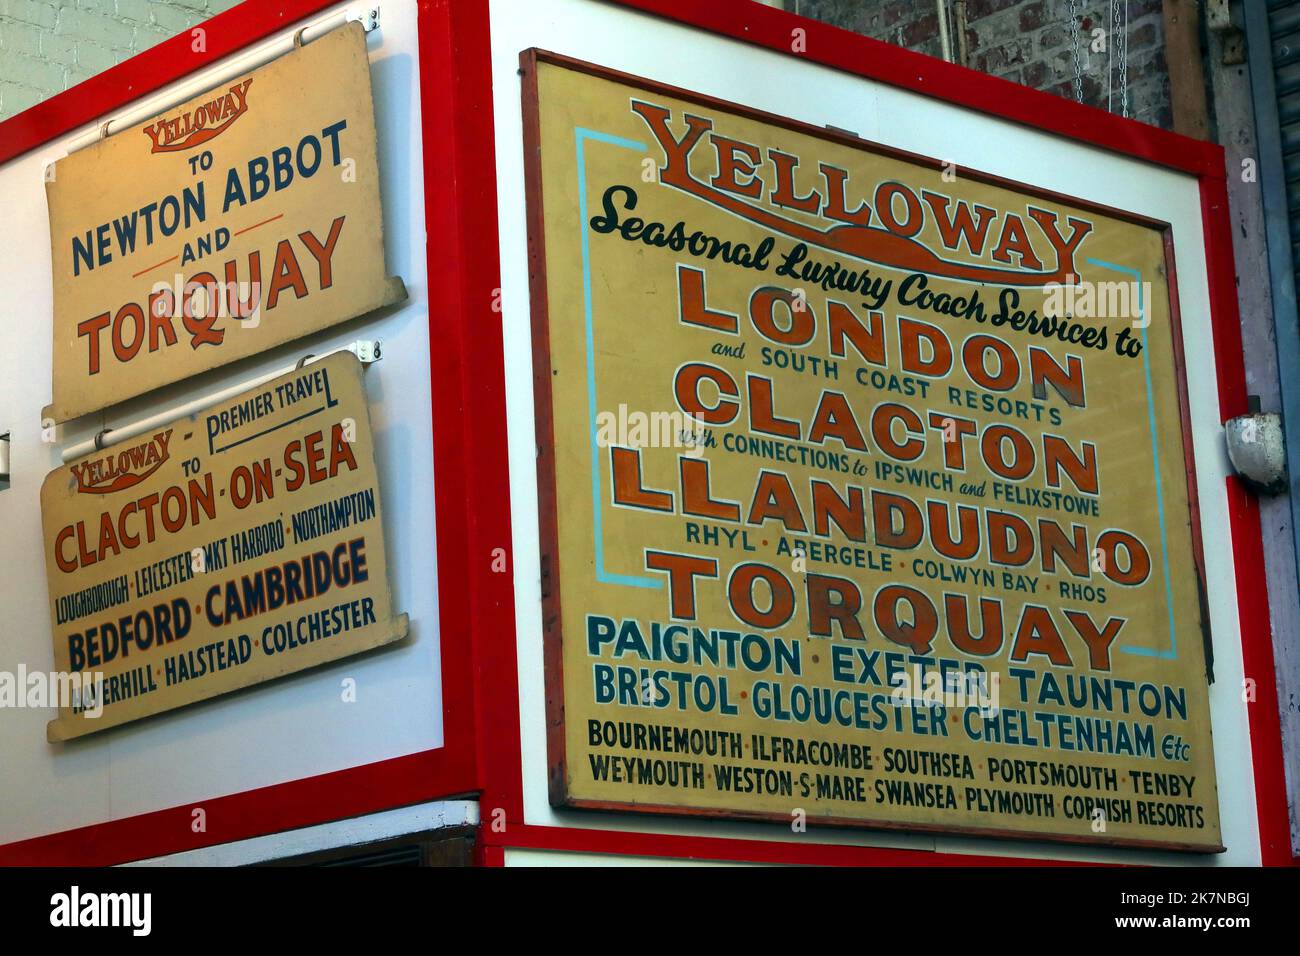 Yelloway Coachways bus routes posters, to Torquay, Clacton-on-Sea, London, Llandudno, Torquay, Paignton, Taunton,Cheltenham, Cornish Resorts Stock Photo